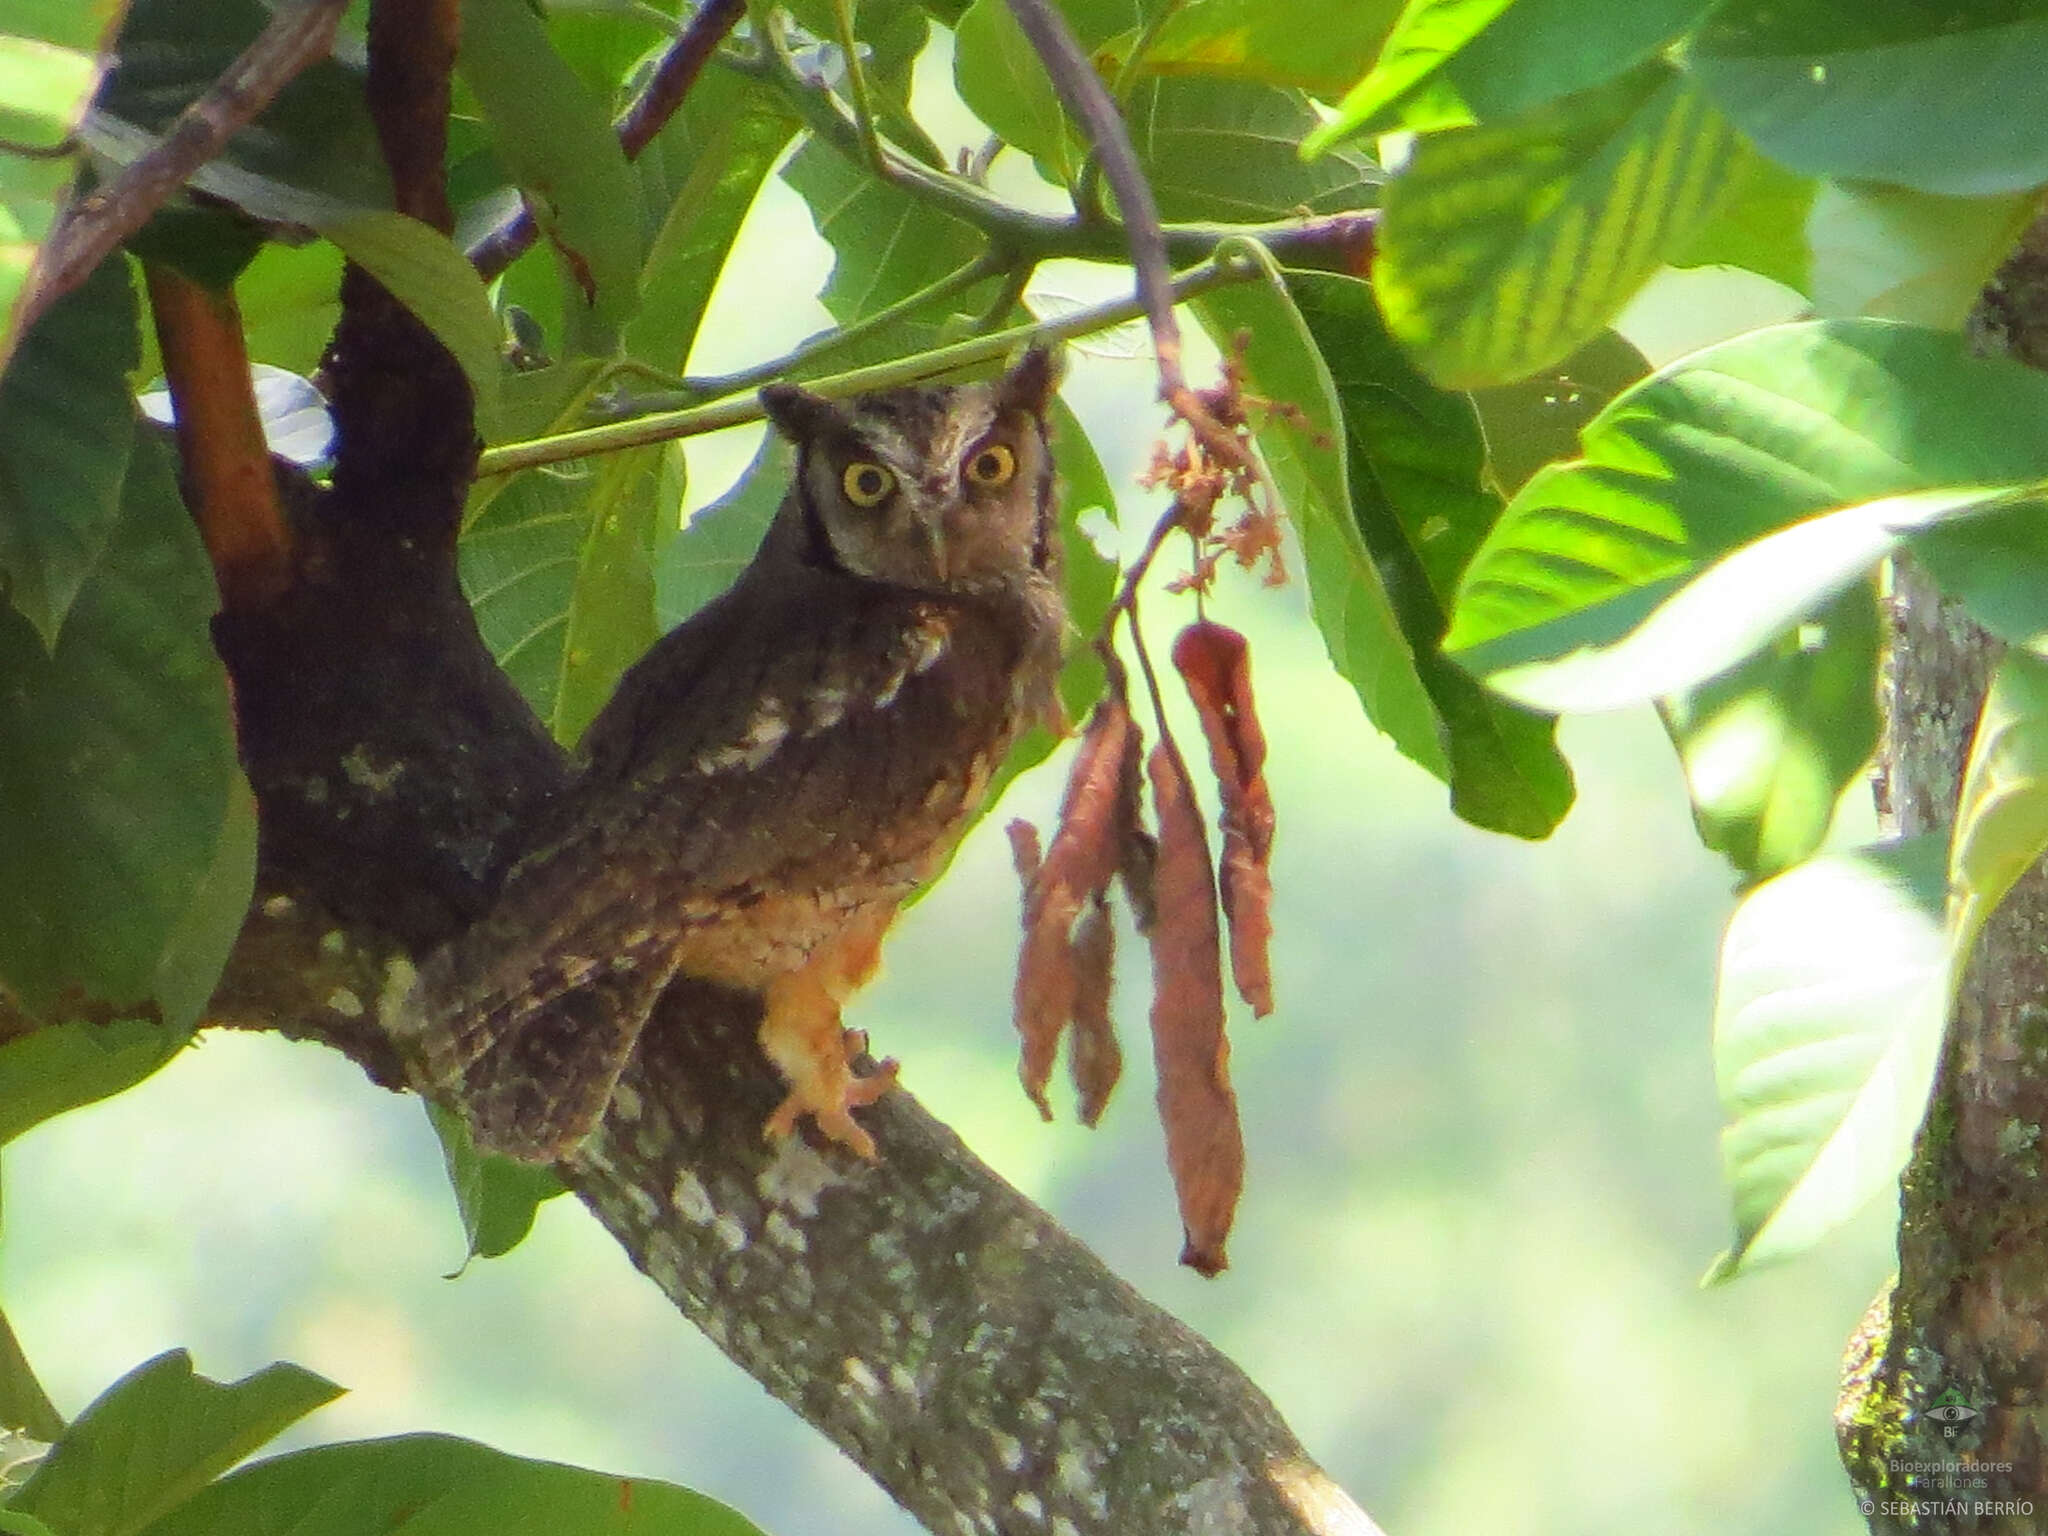 Image of Tropical Screech Owl